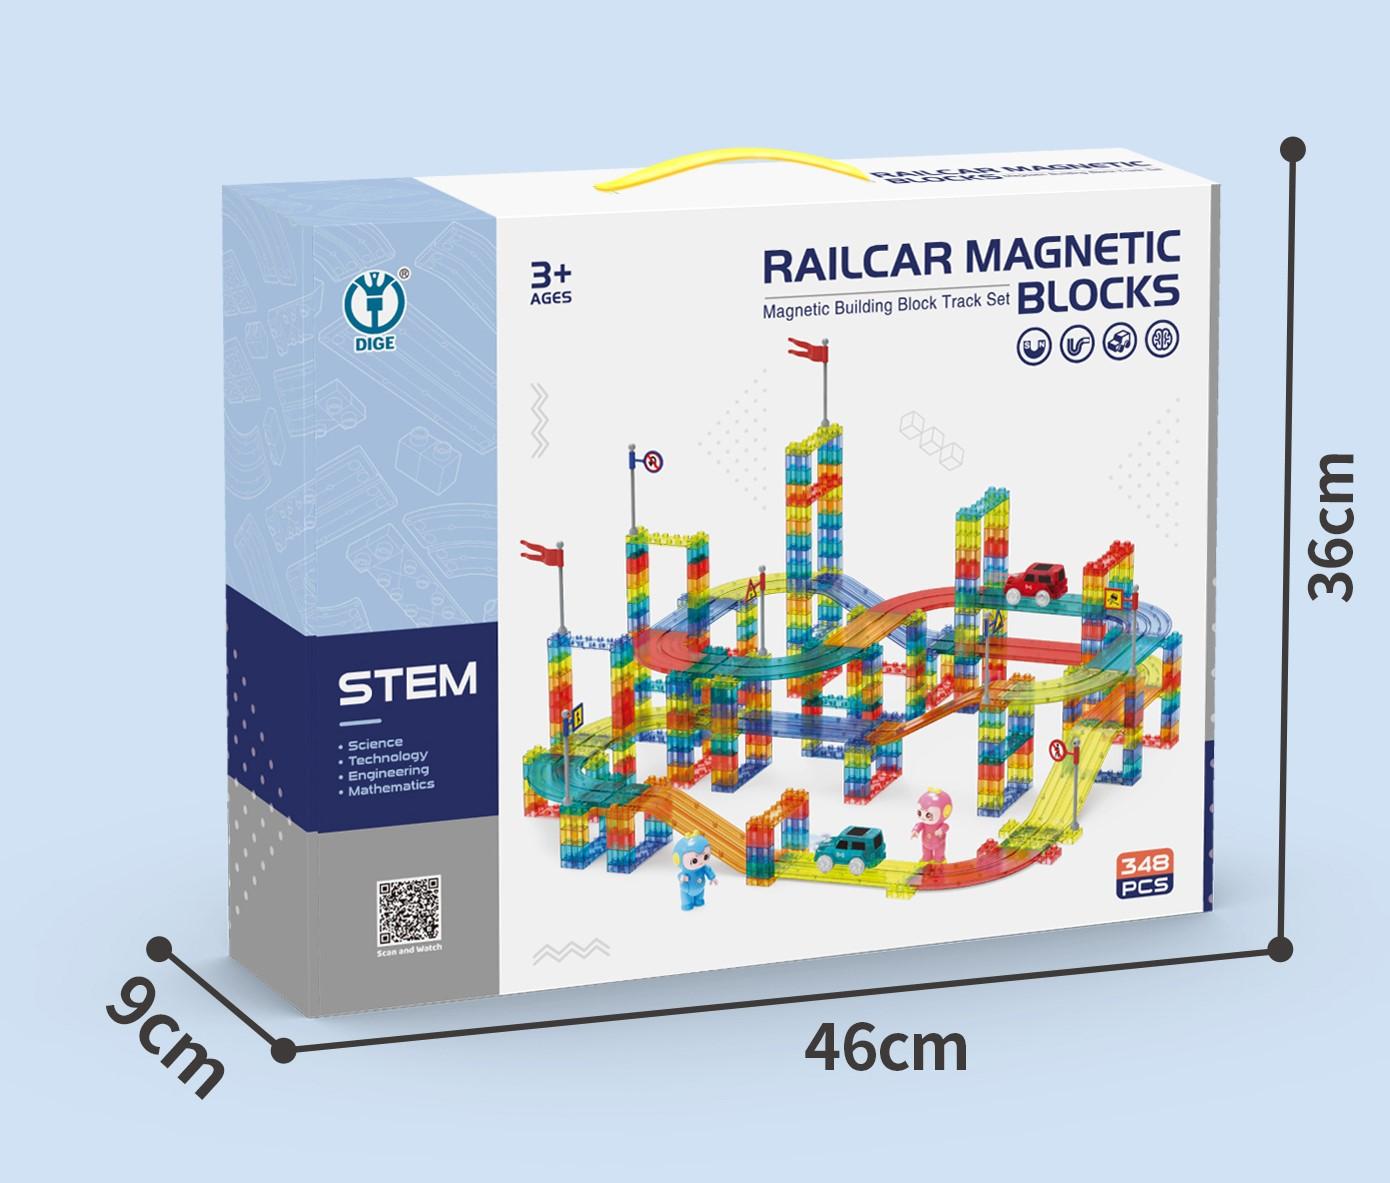 Magnetic building blocks - Tracks - Set of 348 pieces